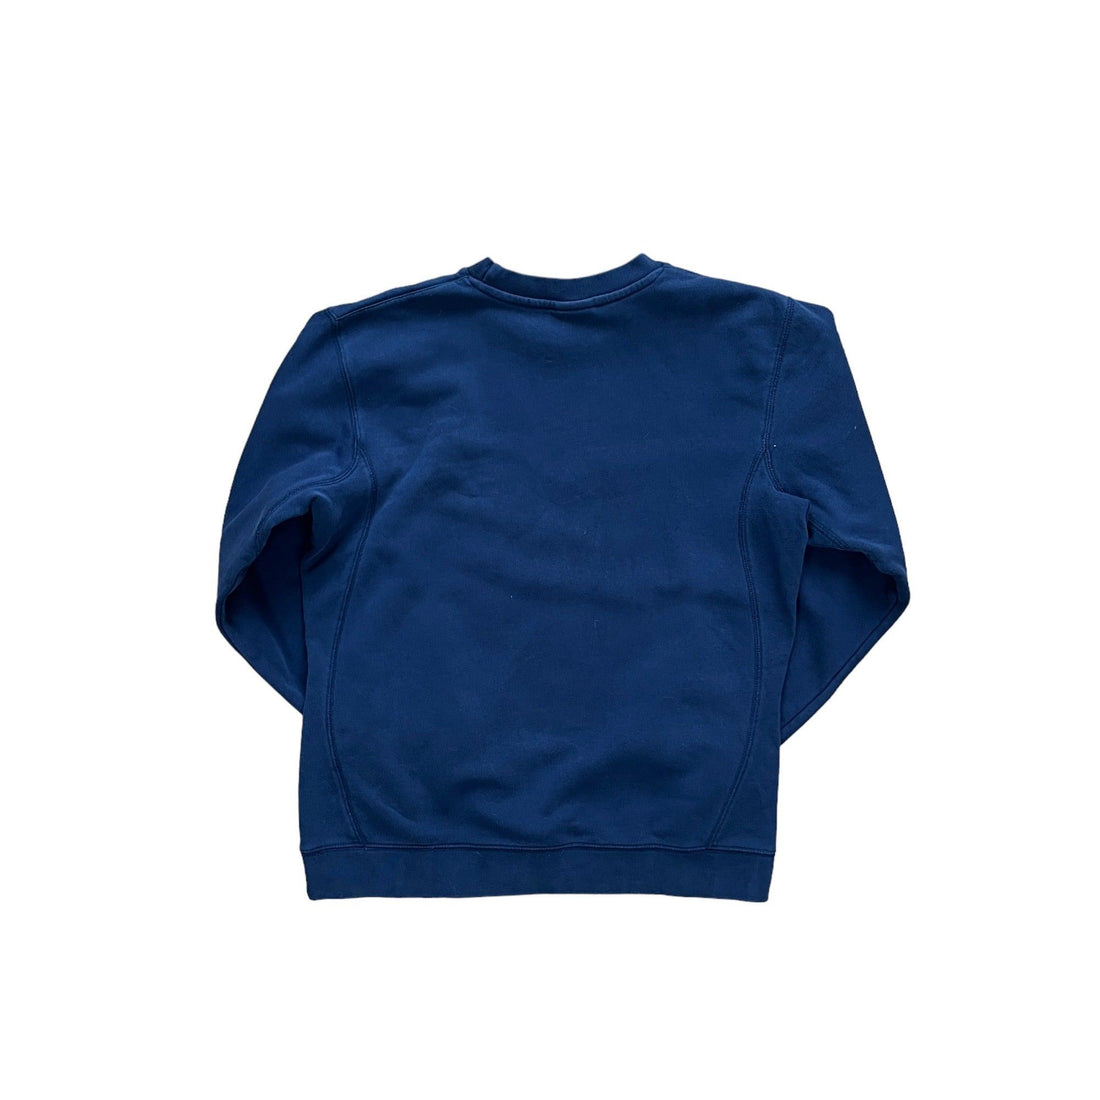 Women’s Vintage 90s Navy Blue Nike Sweatshirt - Medium - The Streetwear Studio